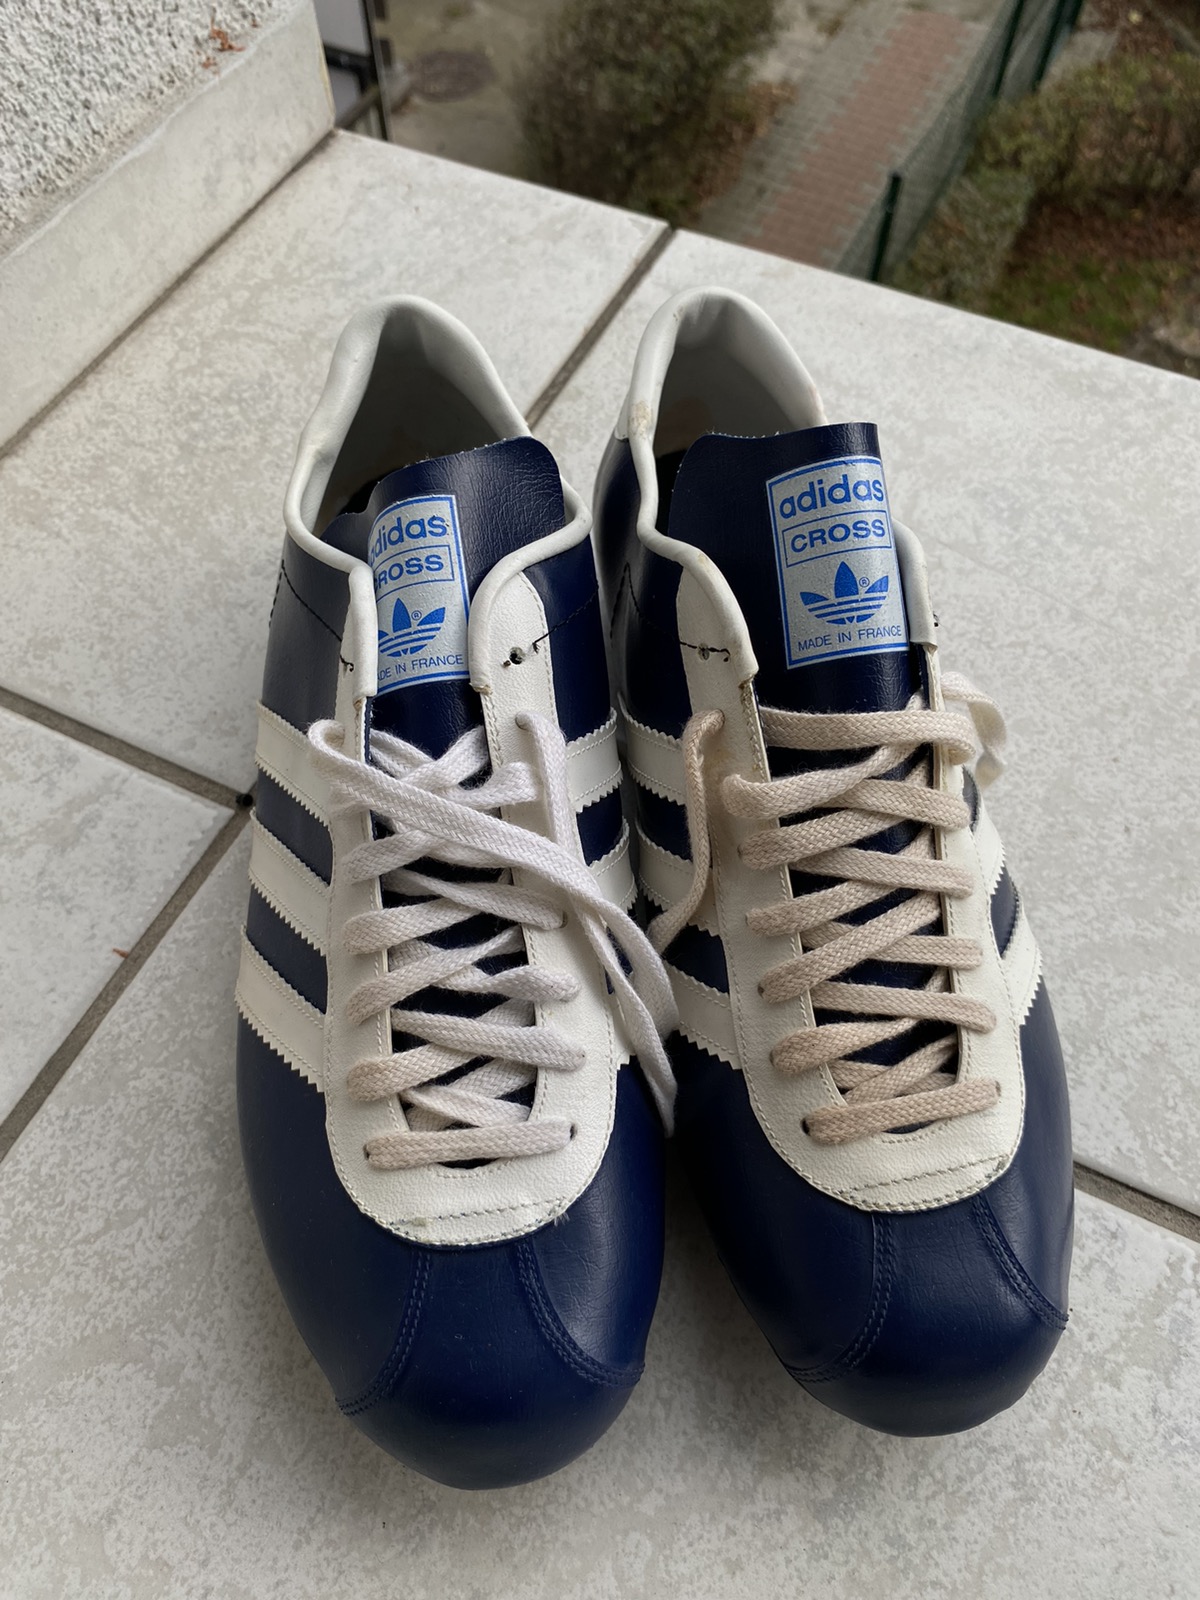 Adidas Cross football boots very rare 1970-80s - 2